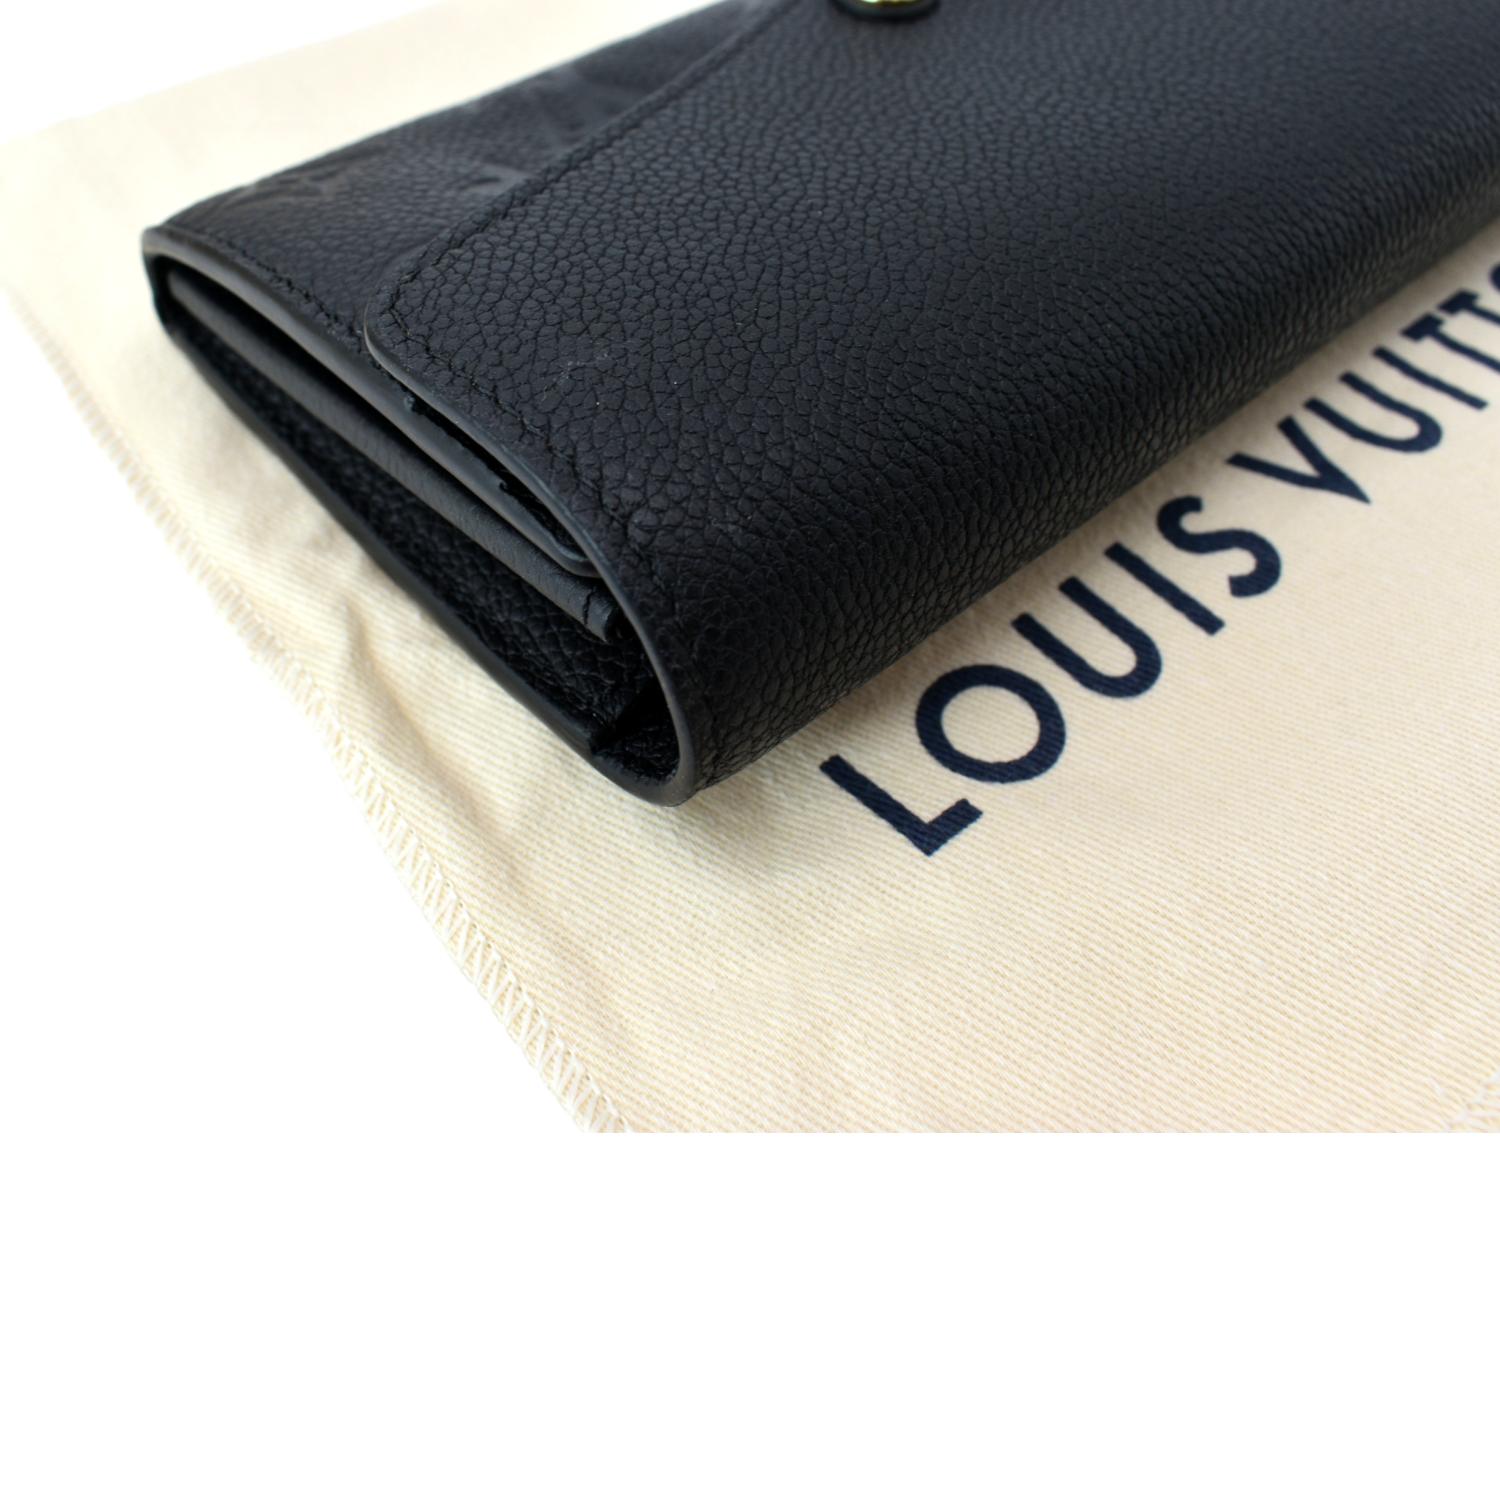 Louis Vuitton Sarah Wallet Black Monogram Empreinte